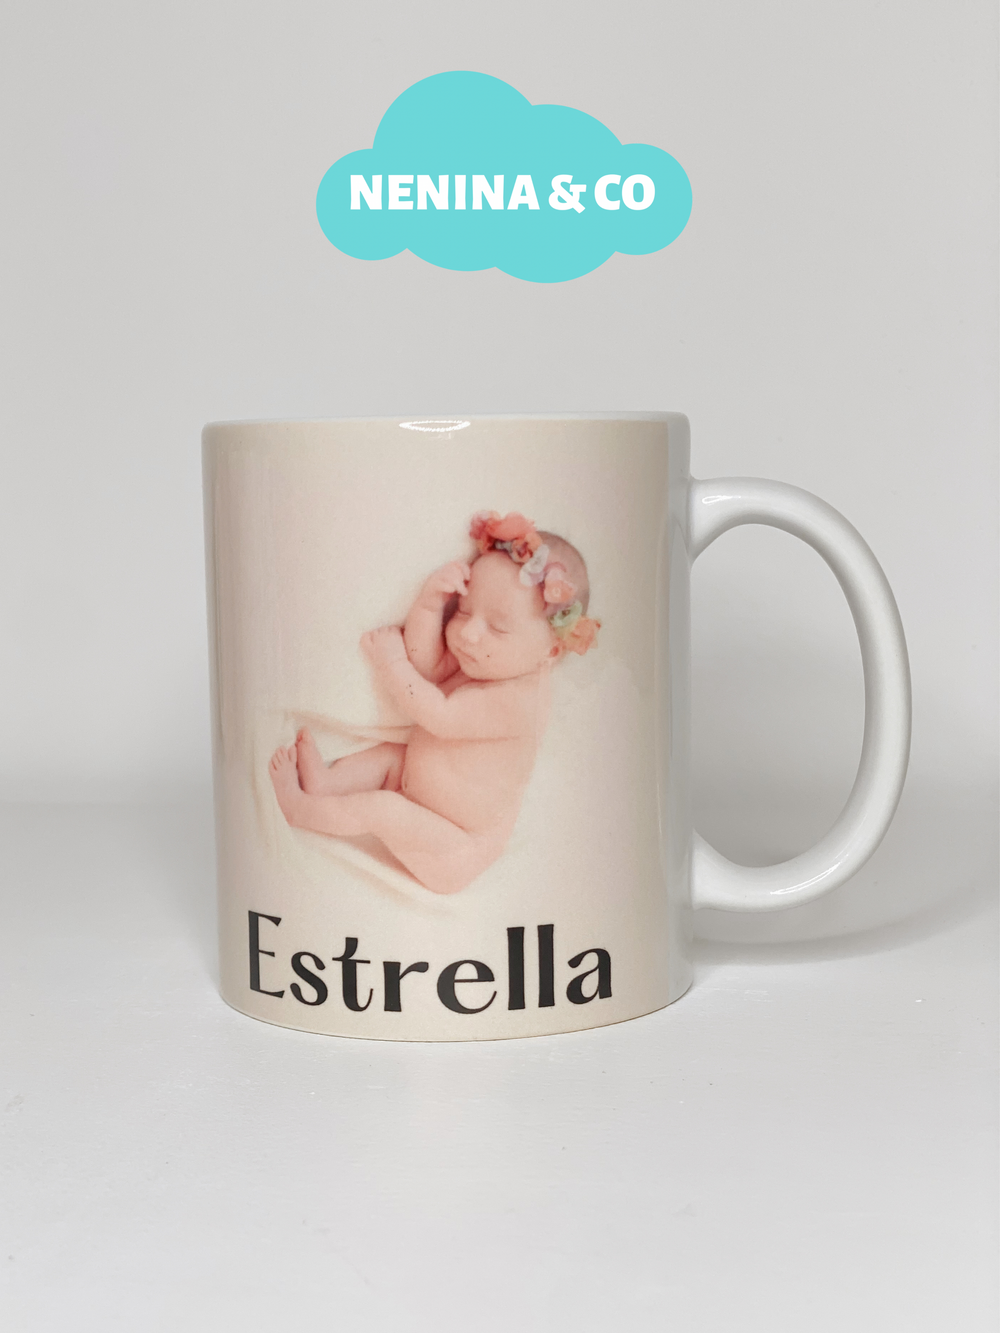 Caneca personalizada Nenina & Co